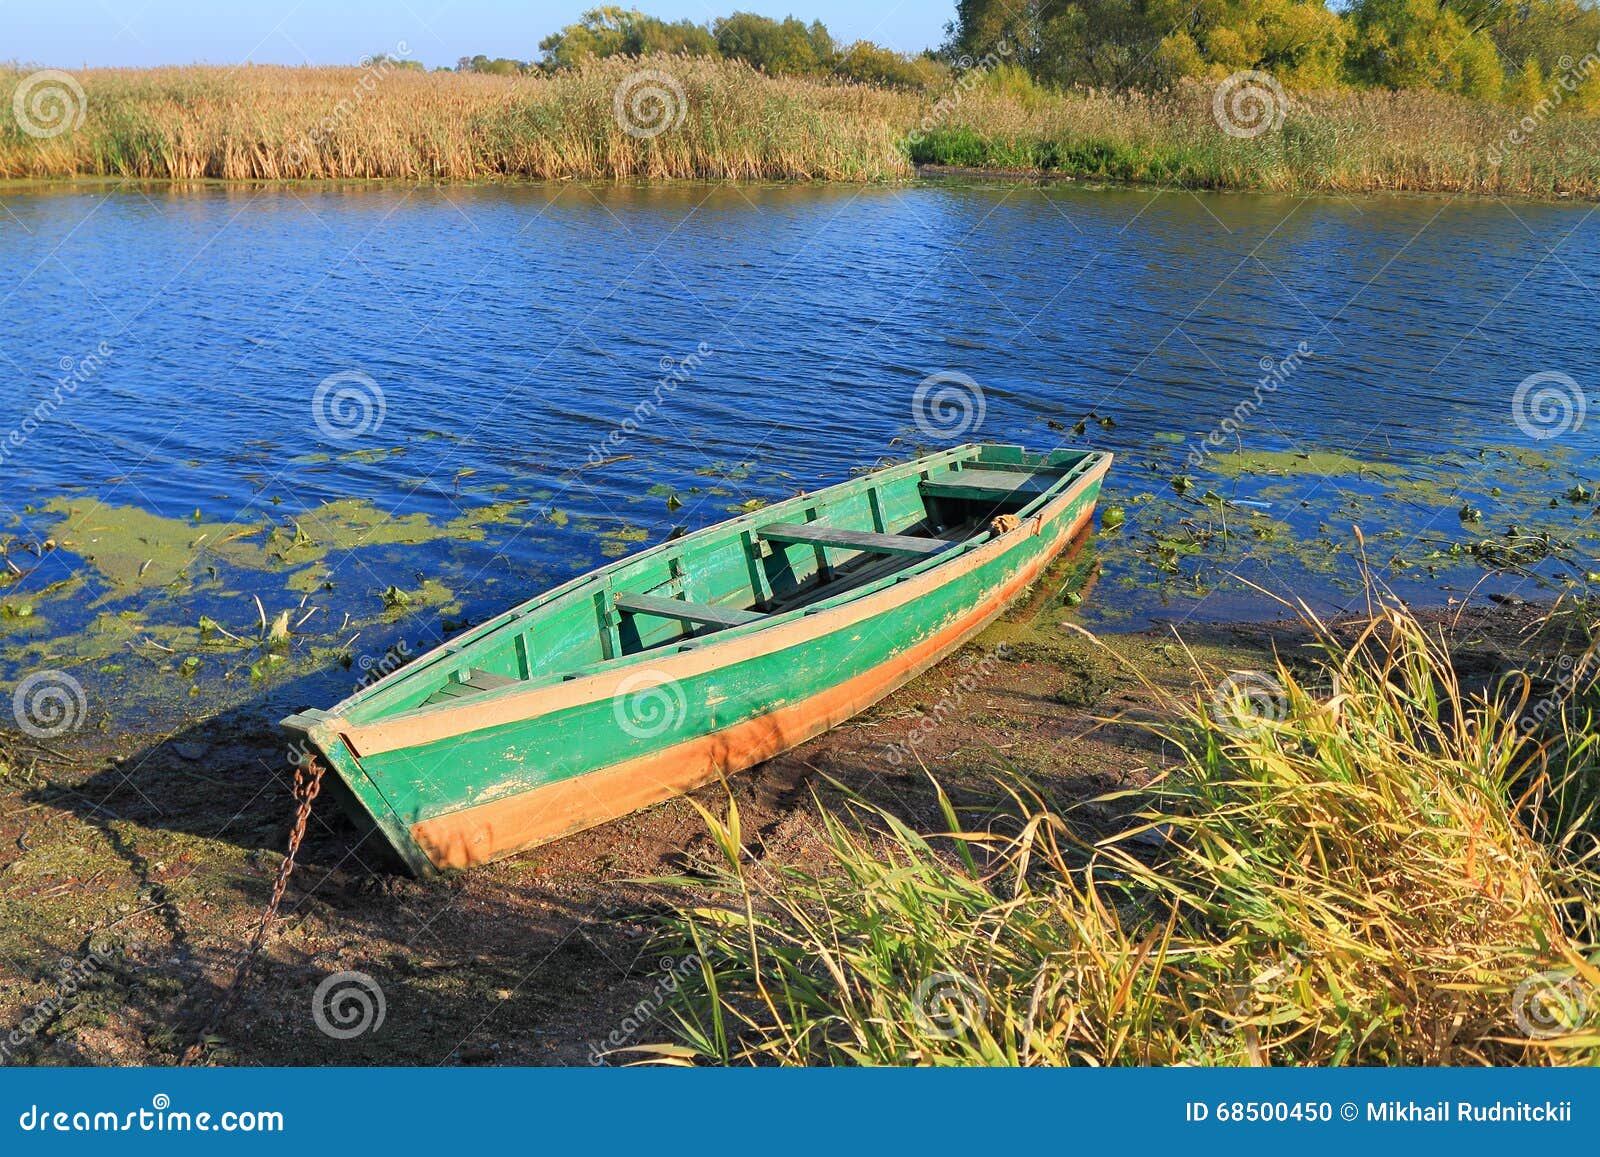 Лодки зеленого цвета. Зеленая лодка деревянная. Катер зеленого цвета. Зелёные цвета для лодок. 90х зелёная лодка.